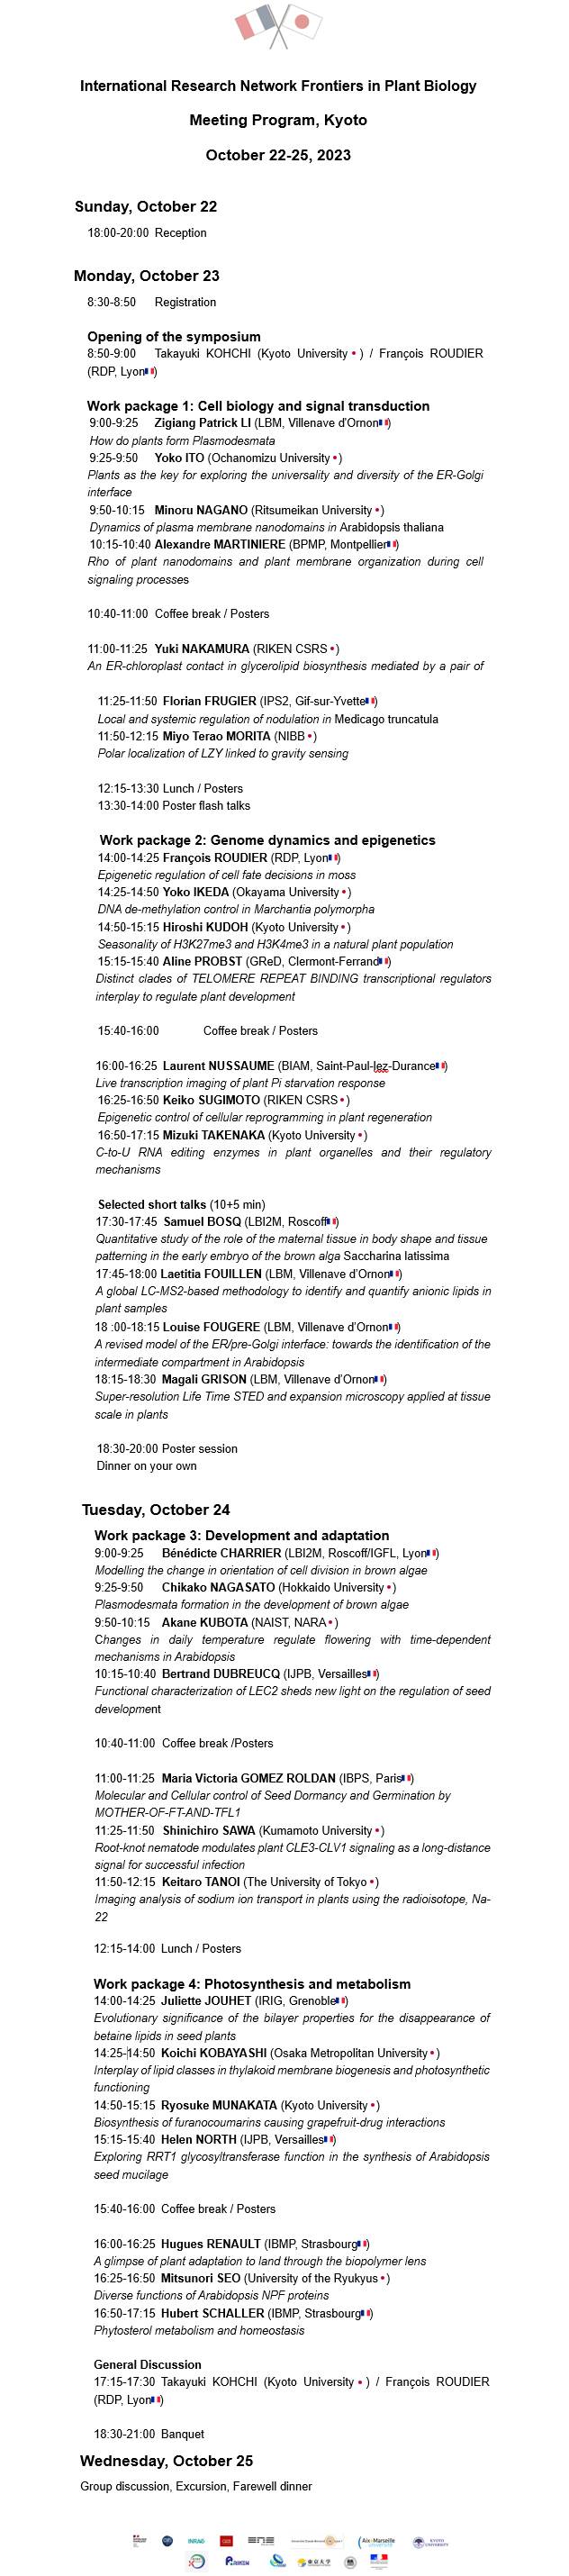 IRN-FJFPB_Kyoto_Symposium_22-25-10-23_program_pdf